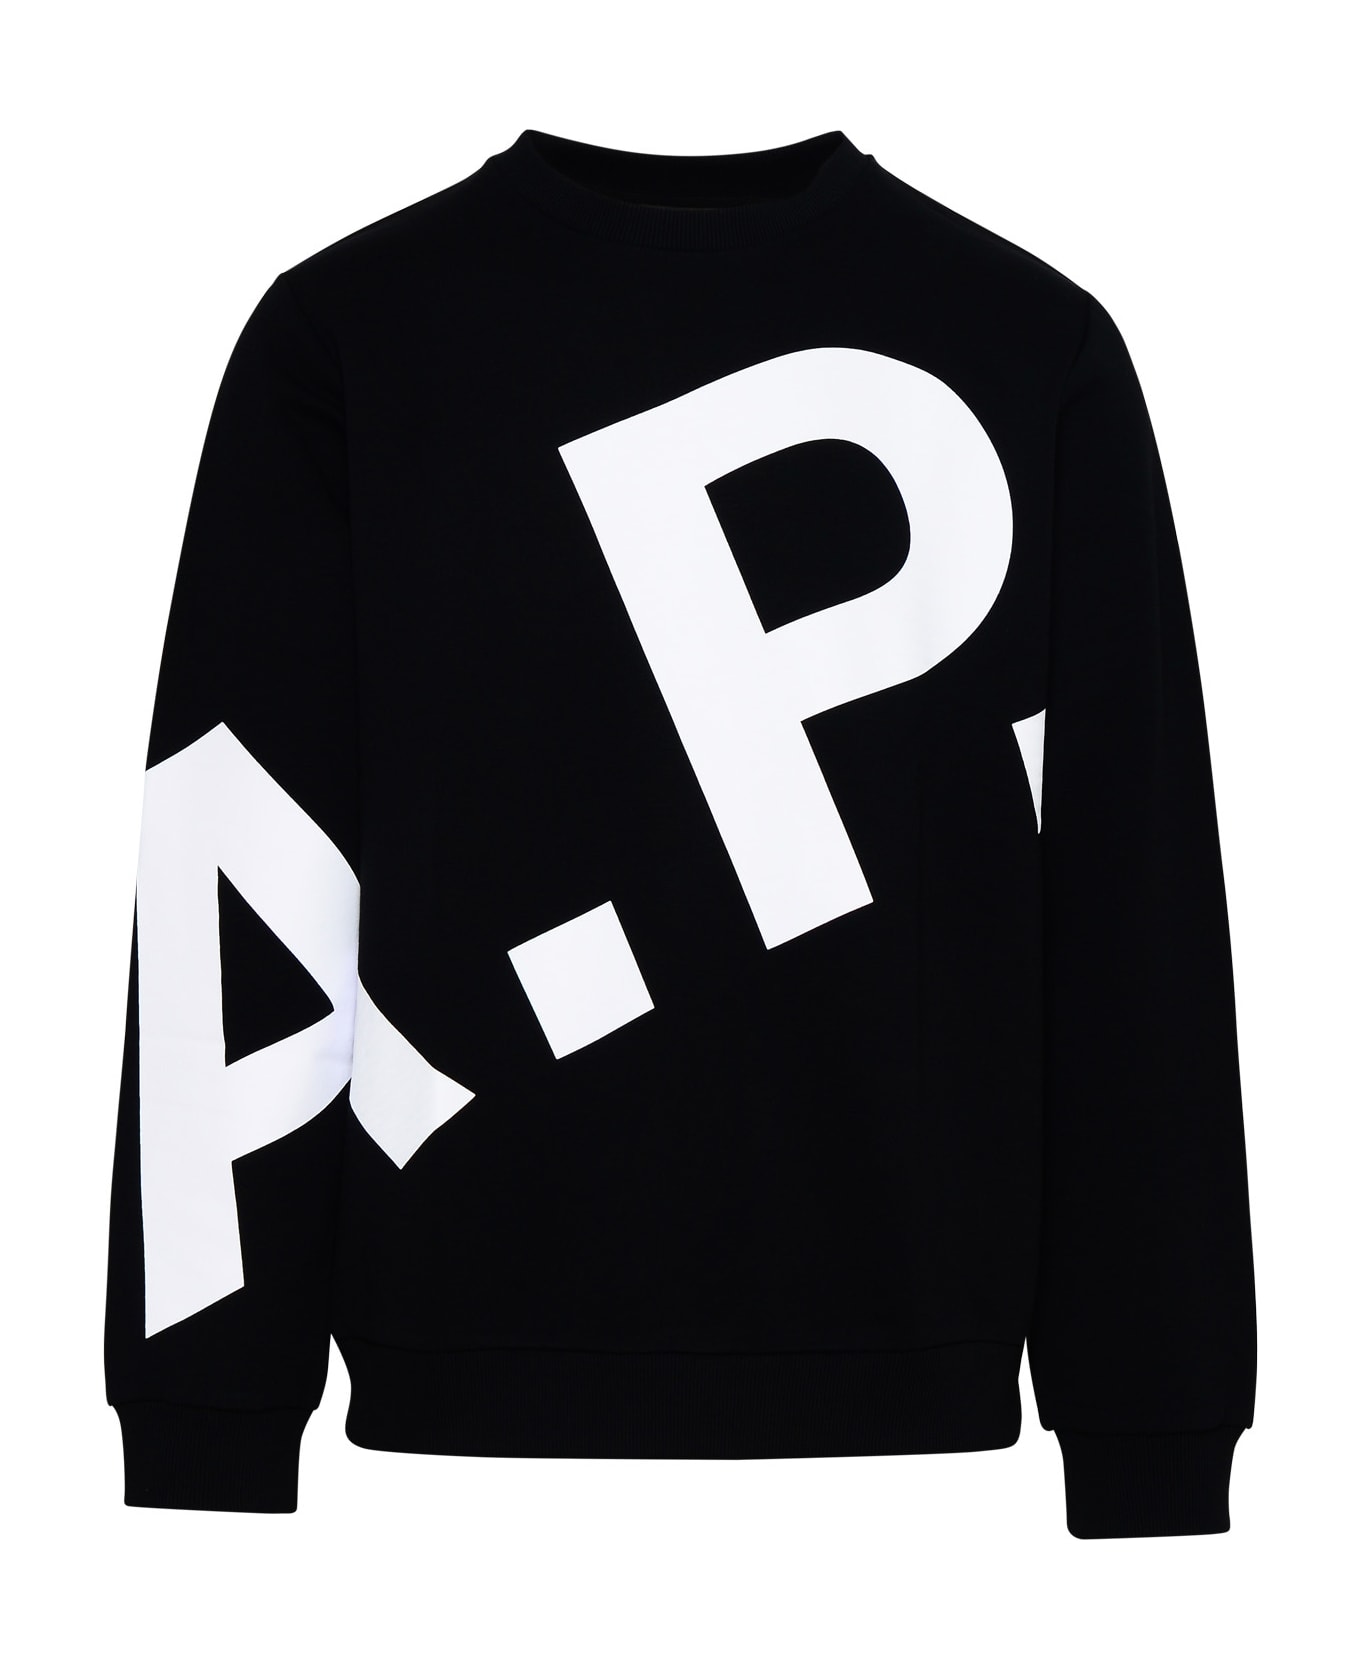 A.P.C. Cory Sweatshirt - NOIR (Black)